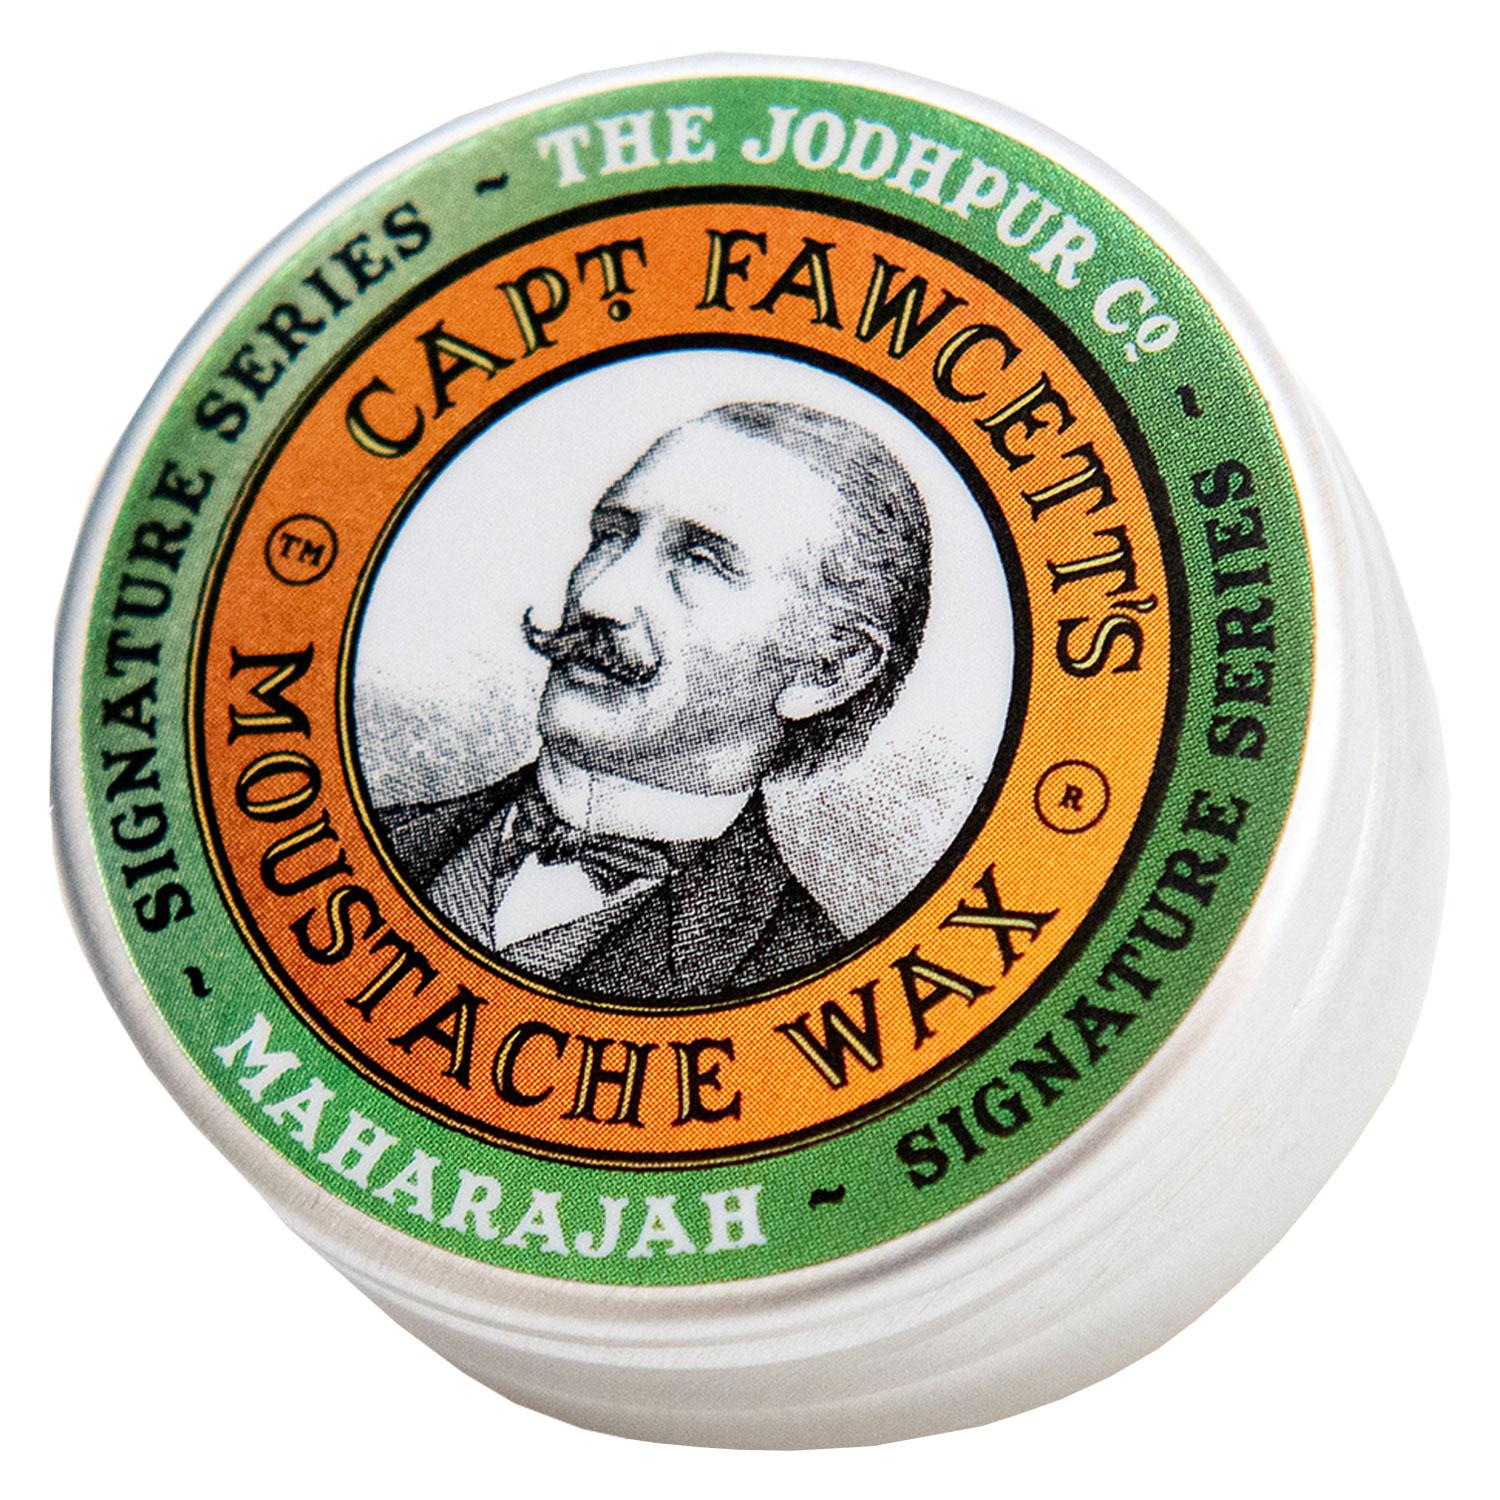 Capt. Fawcett Care - Maharajah Moustache Wax